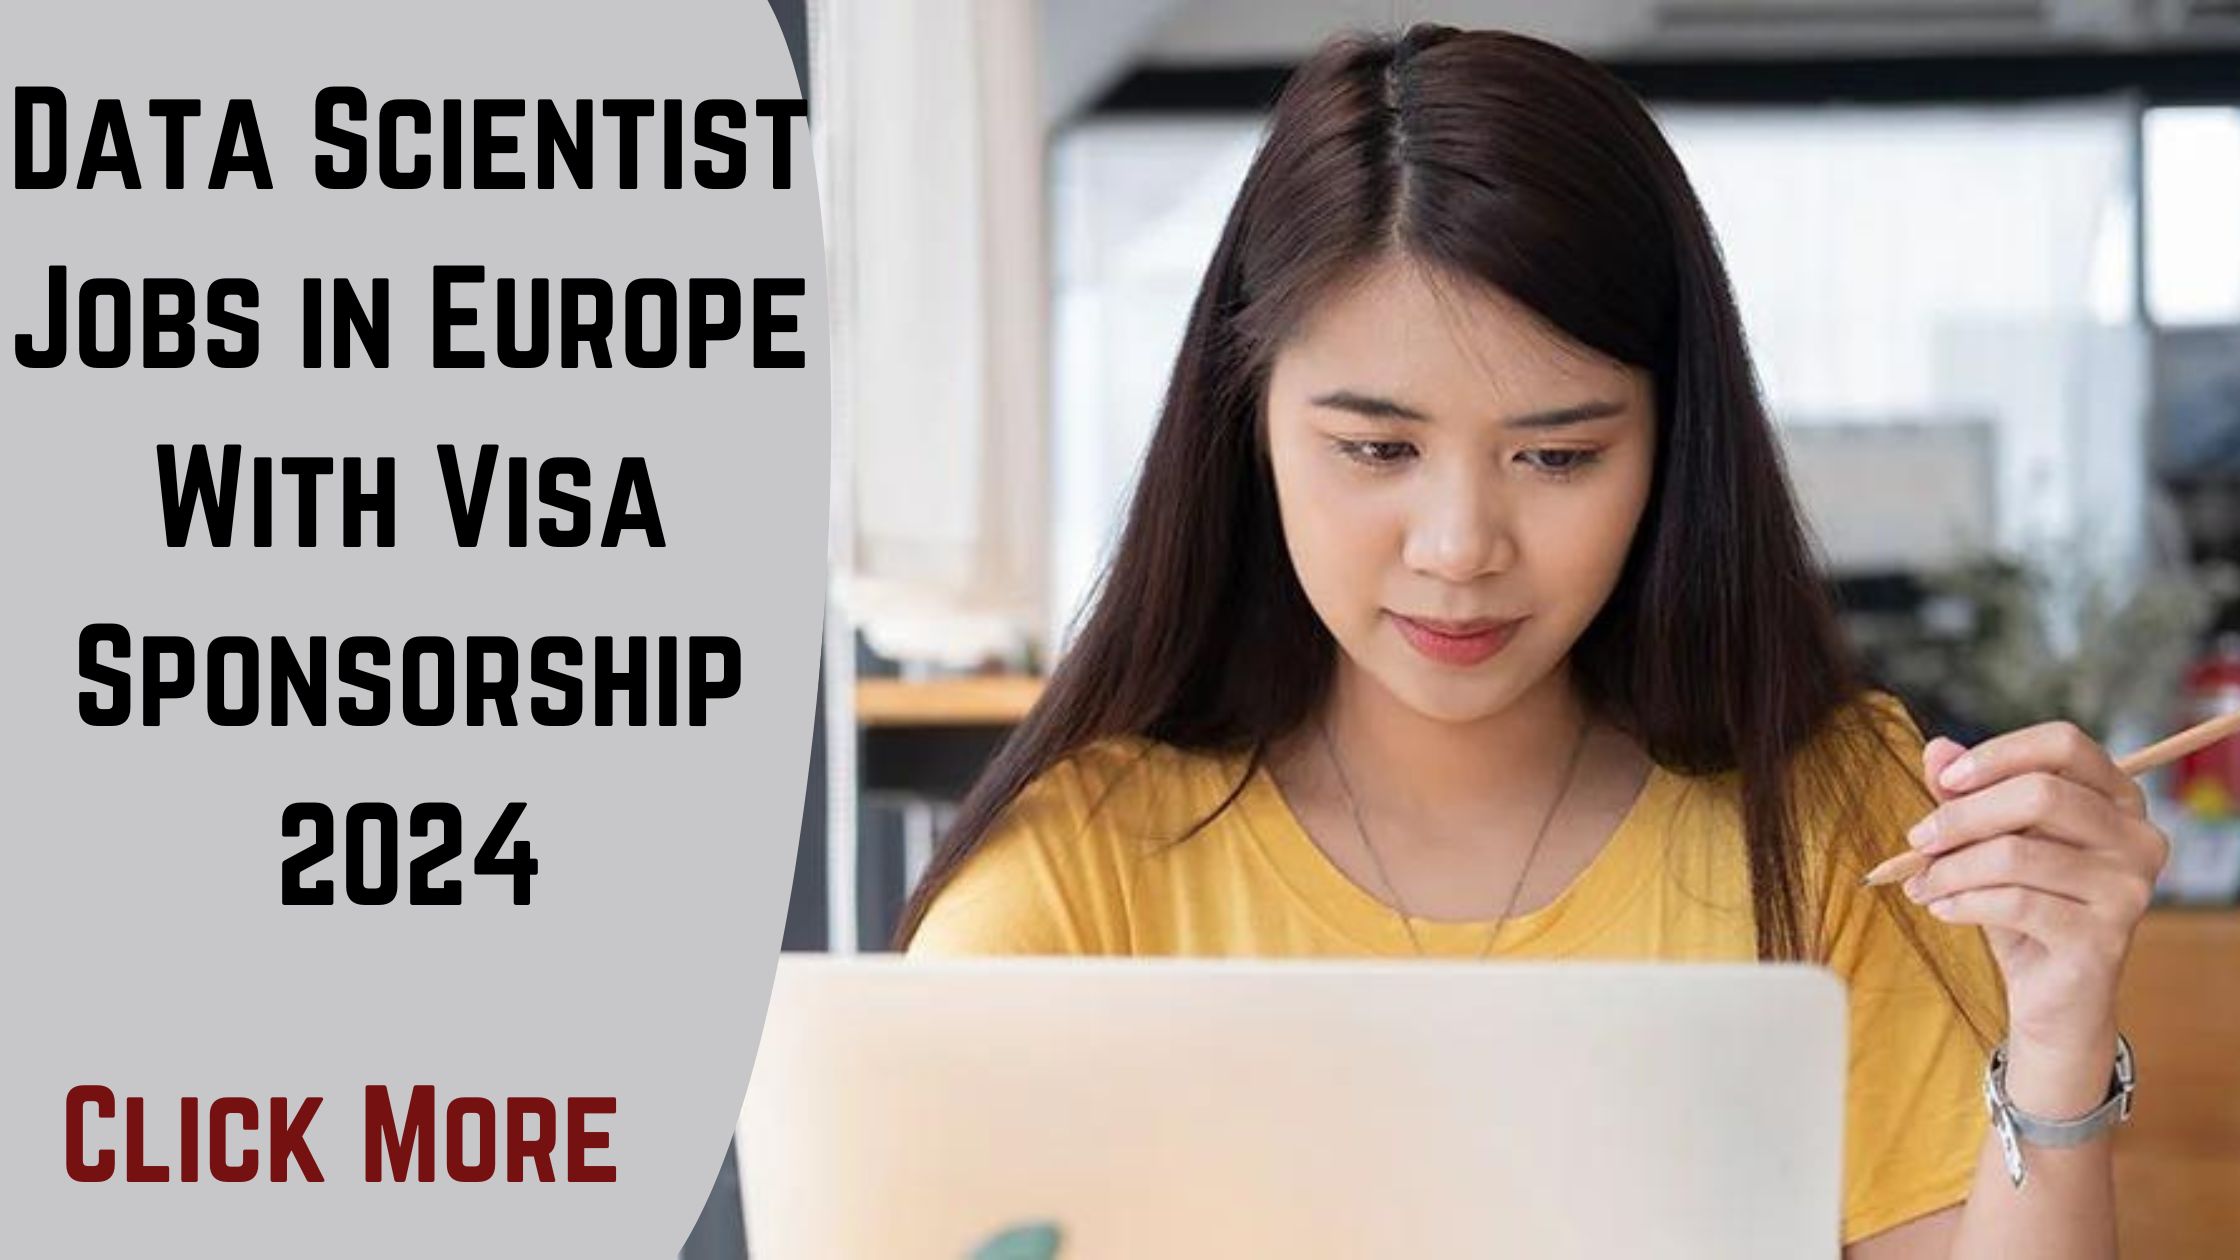 Data Scientist Jobs in Europe With Visa Sponsorship